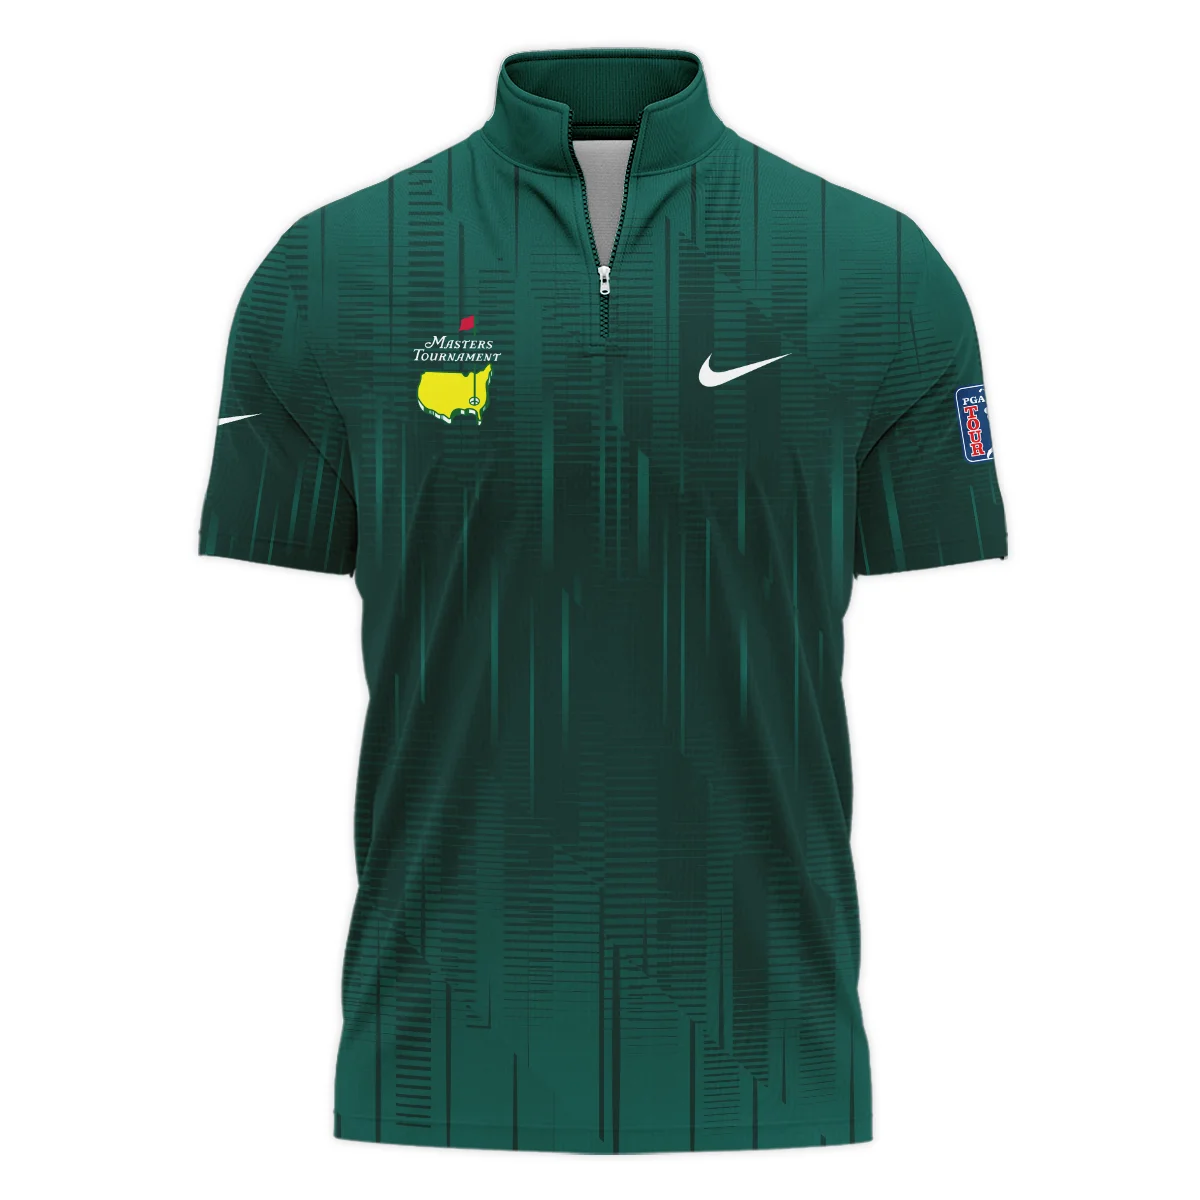 Masters Tournament Nike Dark Green Gradient Stripes Pattern Bomber Jacket Style Classic Bomber Jacket